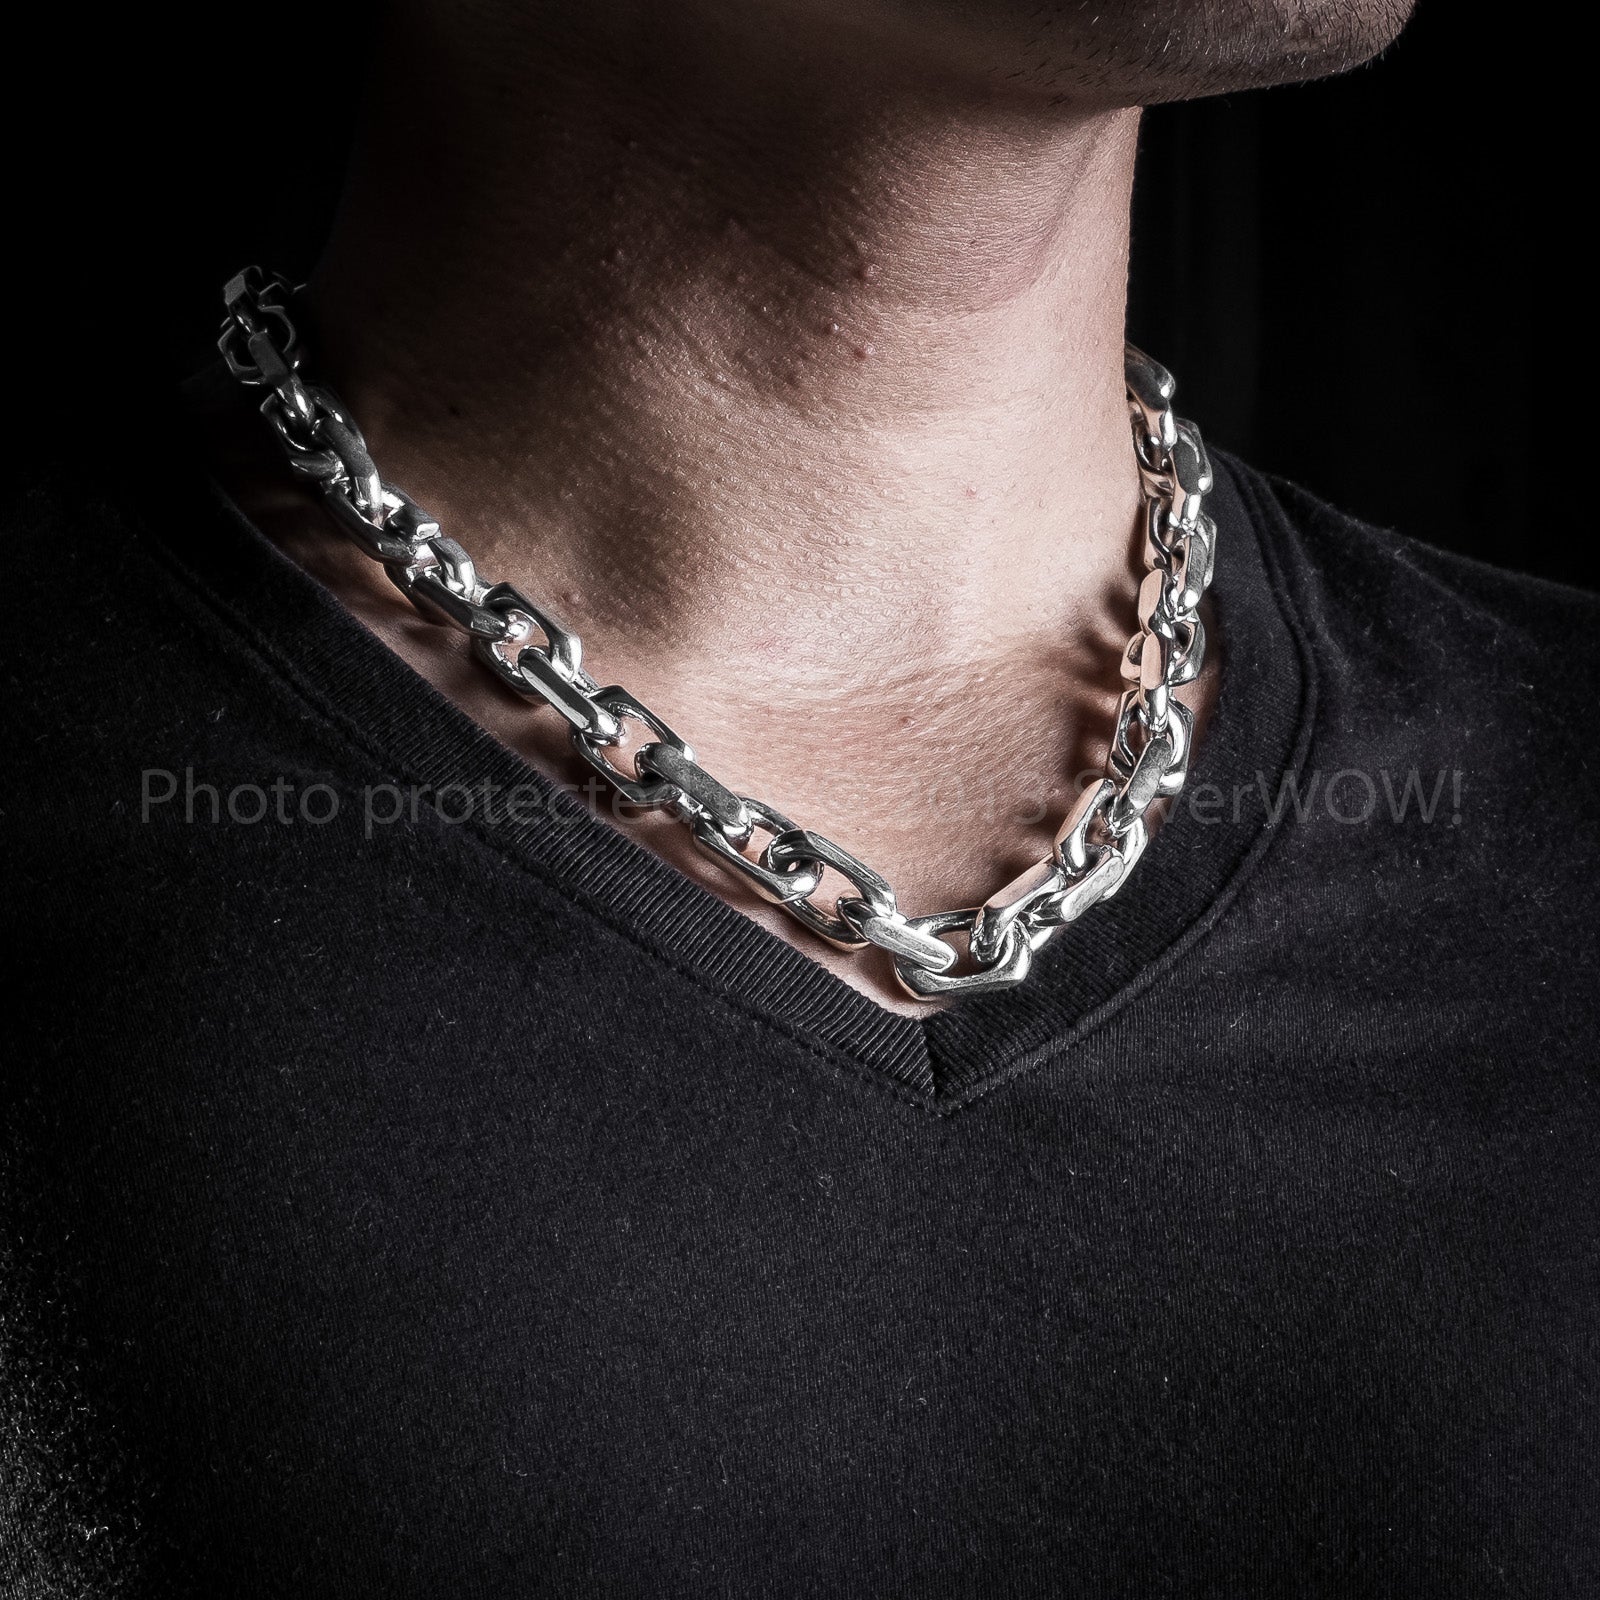 12mm mens heavy Chocker Chain necklace